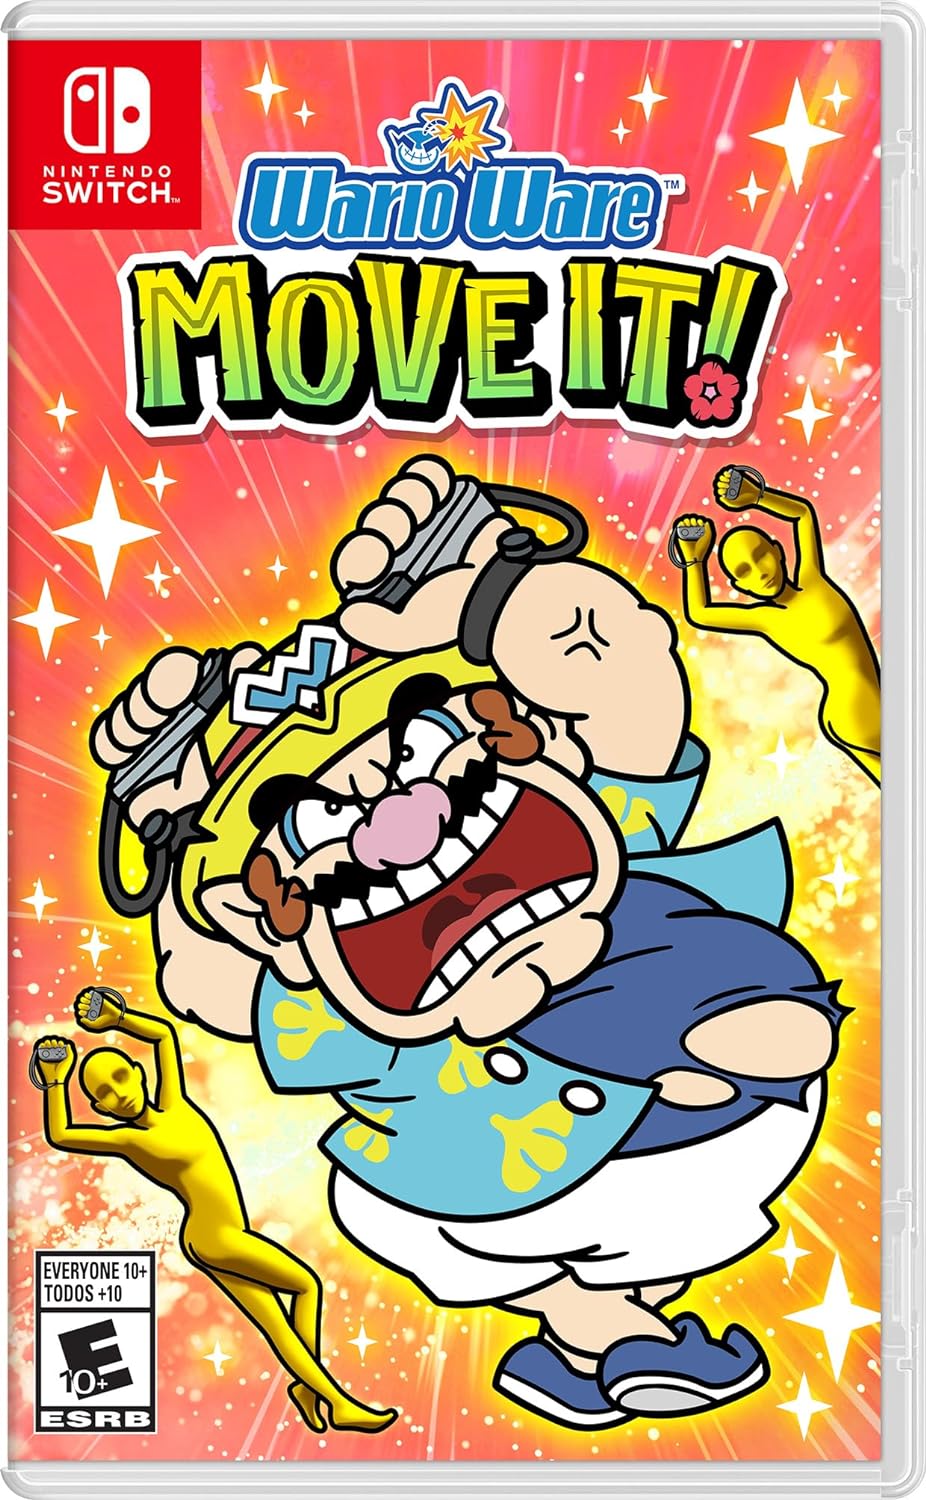 Nintendo Switch - WarioWare: Move It! [NEW]